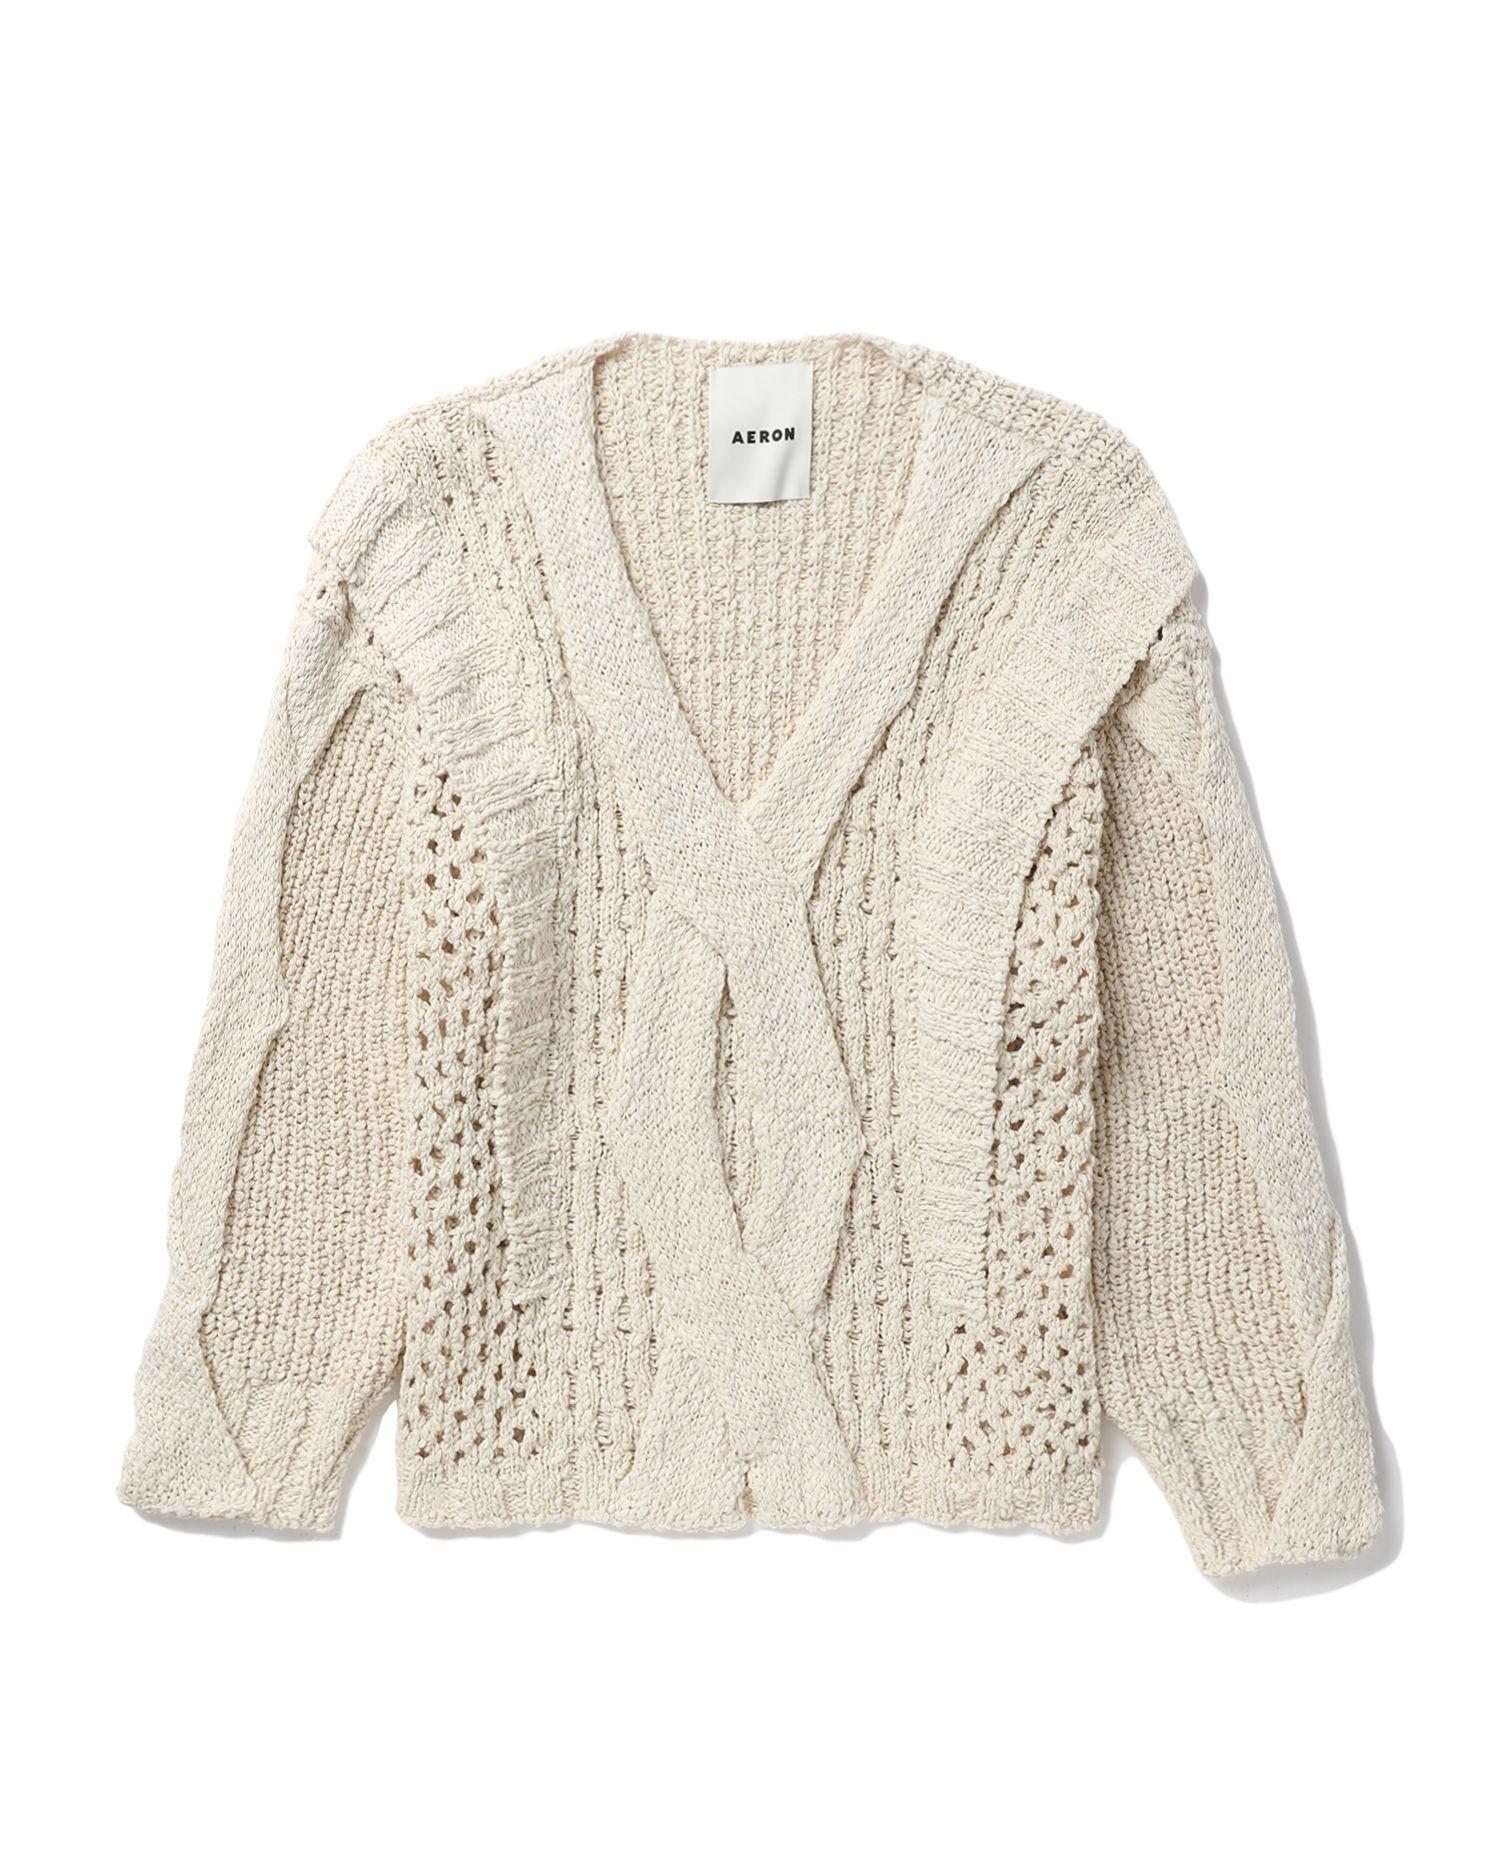 Geneva rustic sweater by AERON